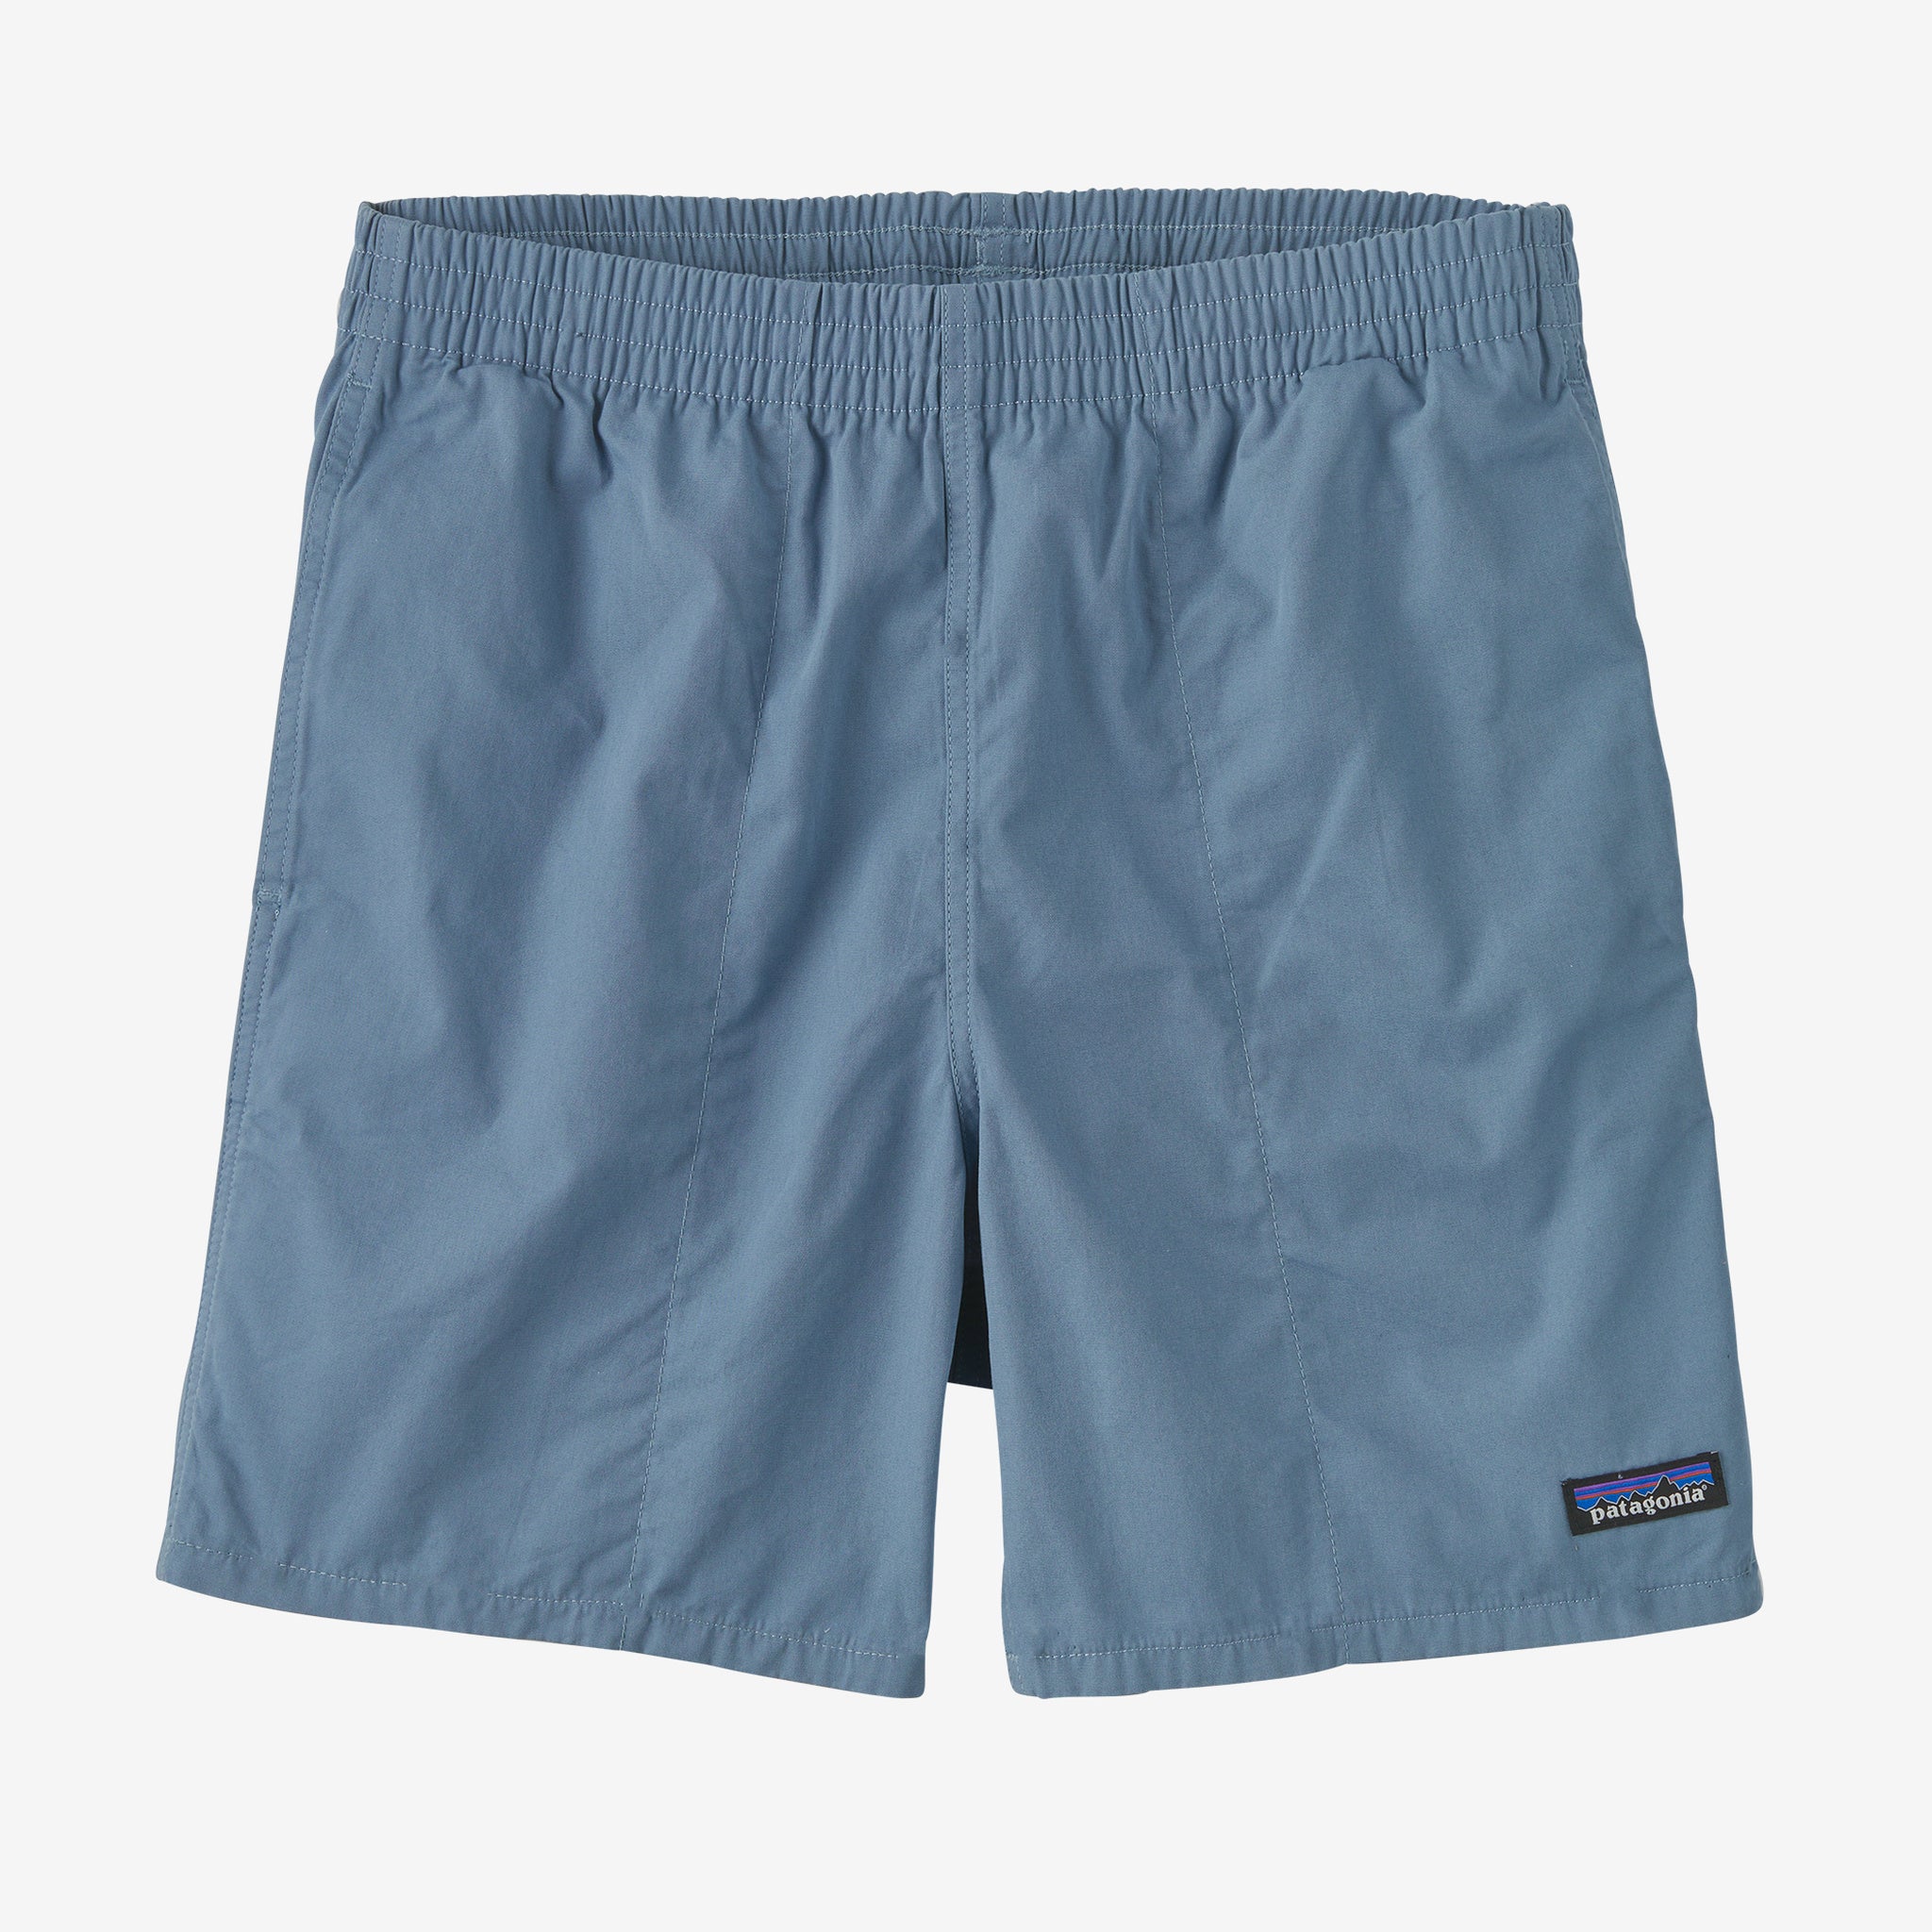 Men's Funhoggers Cotton Shorts - 6